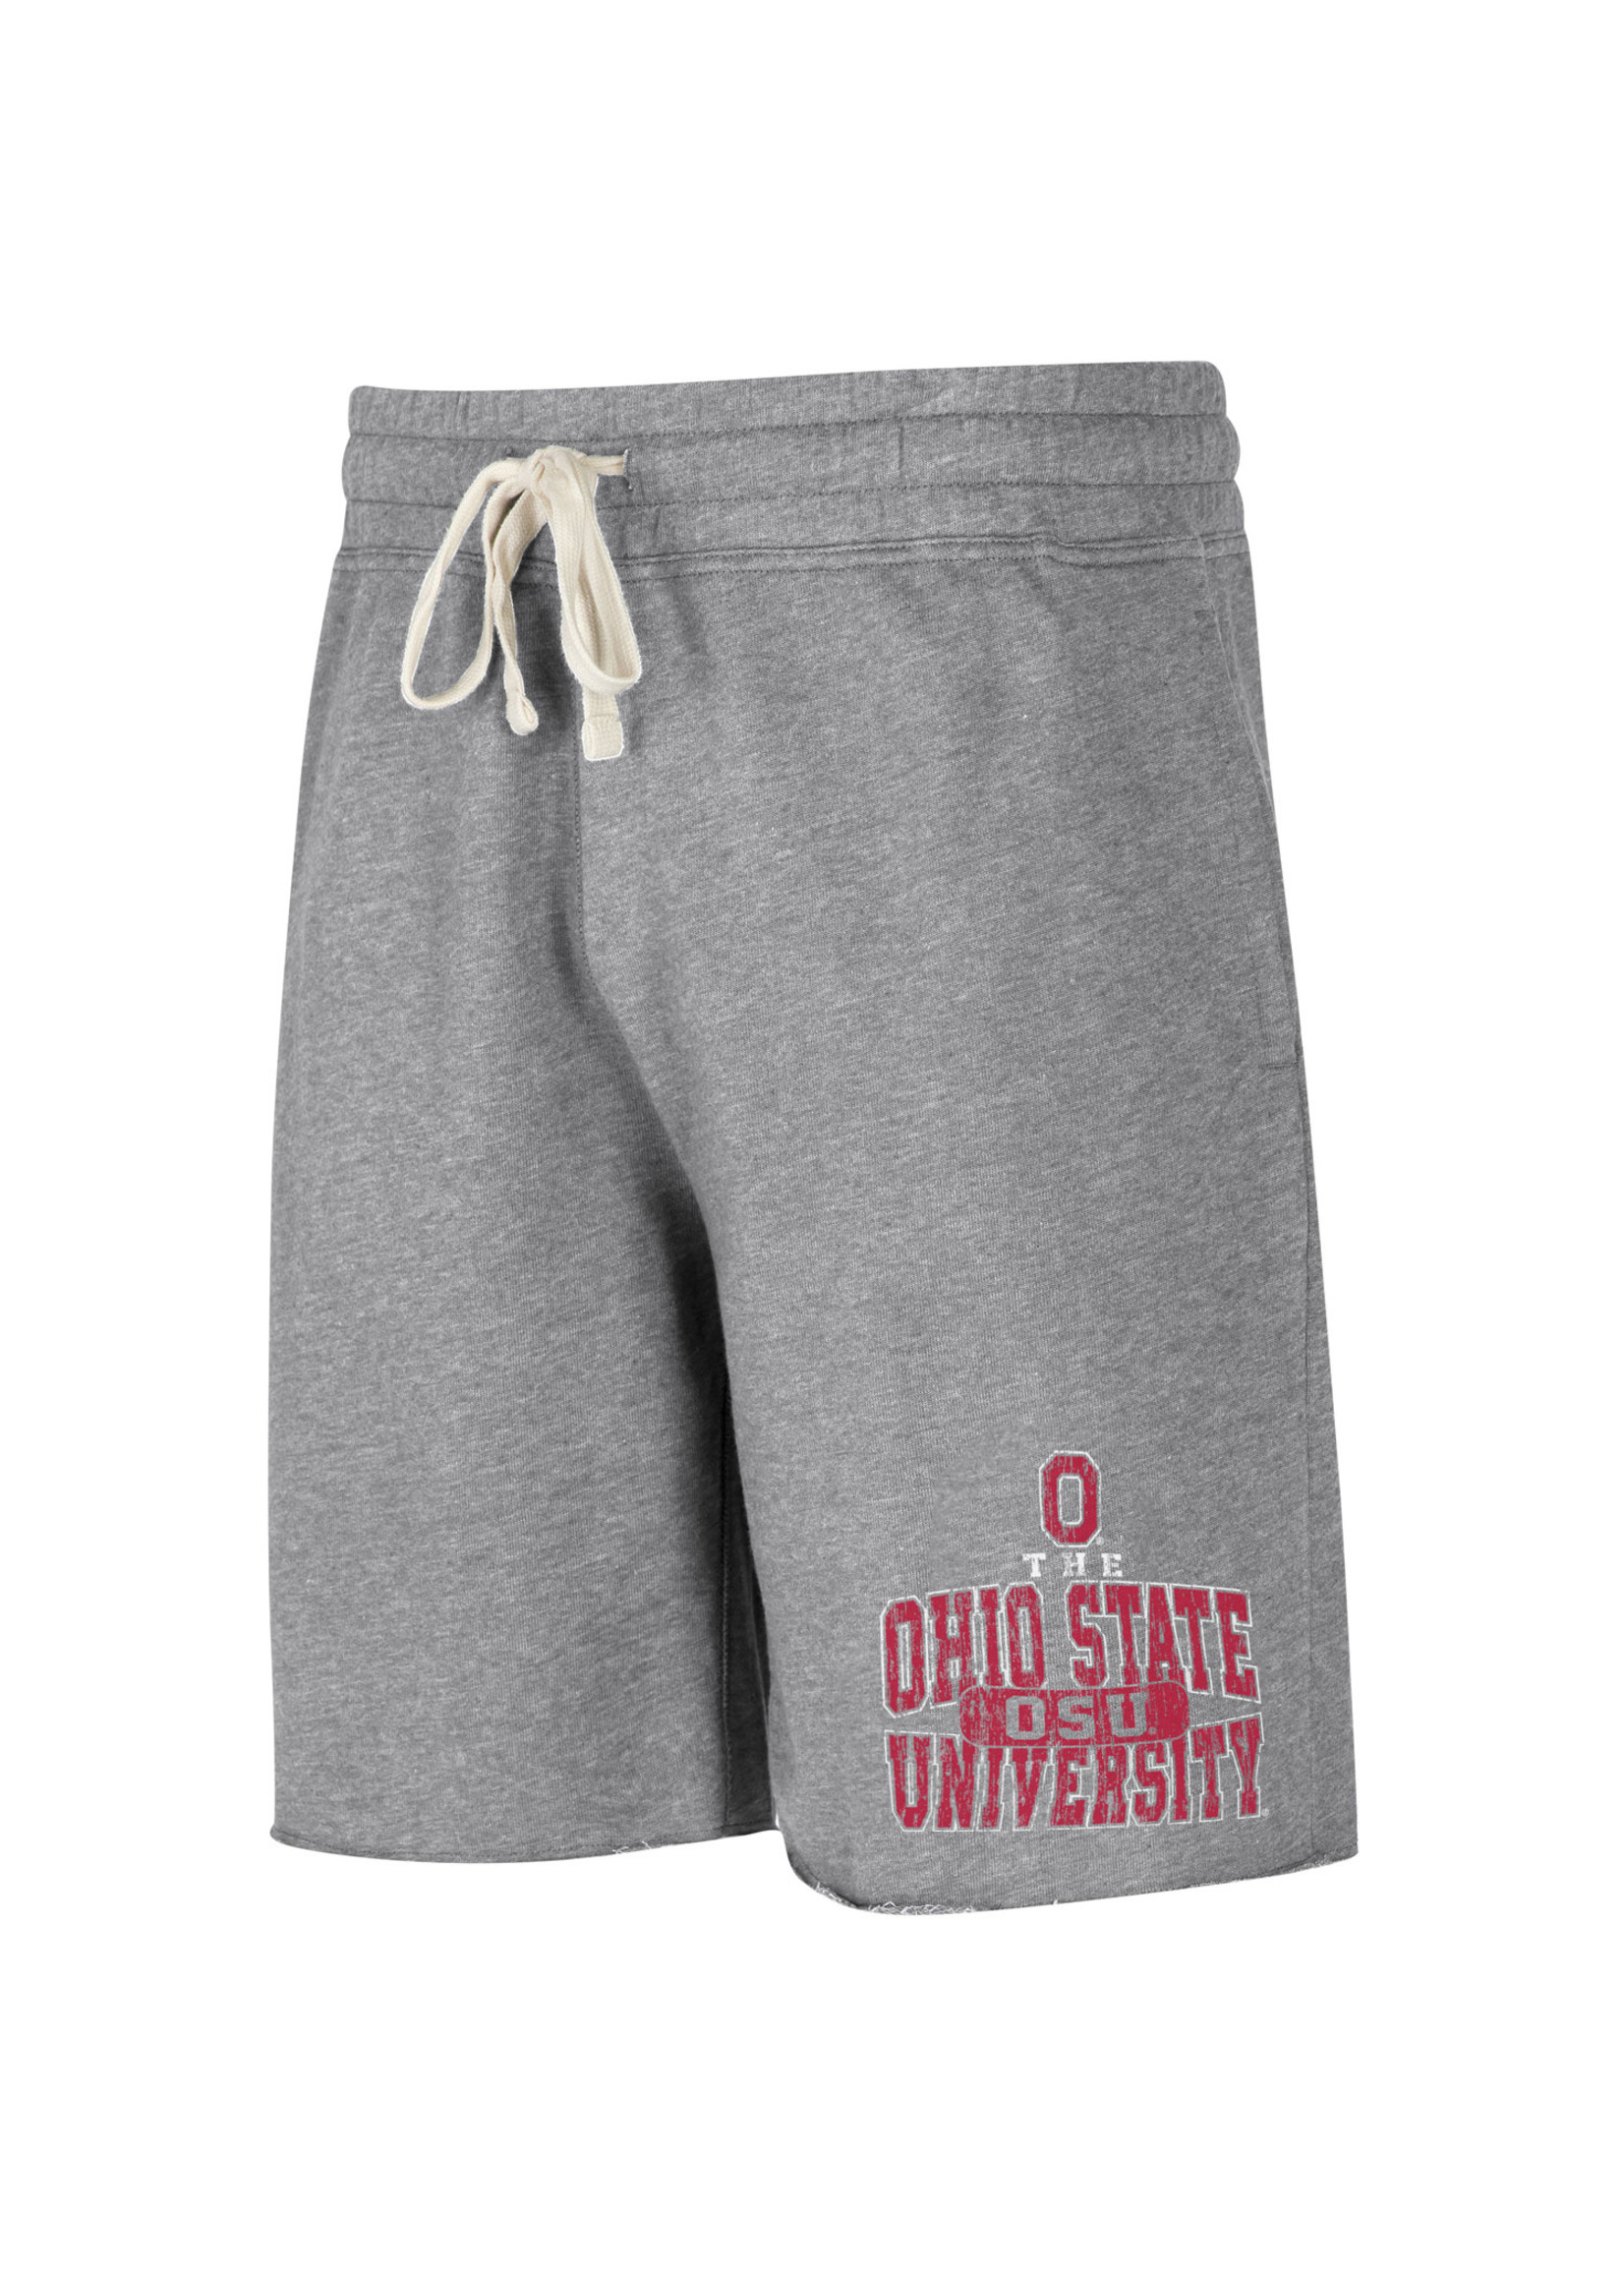 Ohio State Buckeyes Men's Gray Shorts